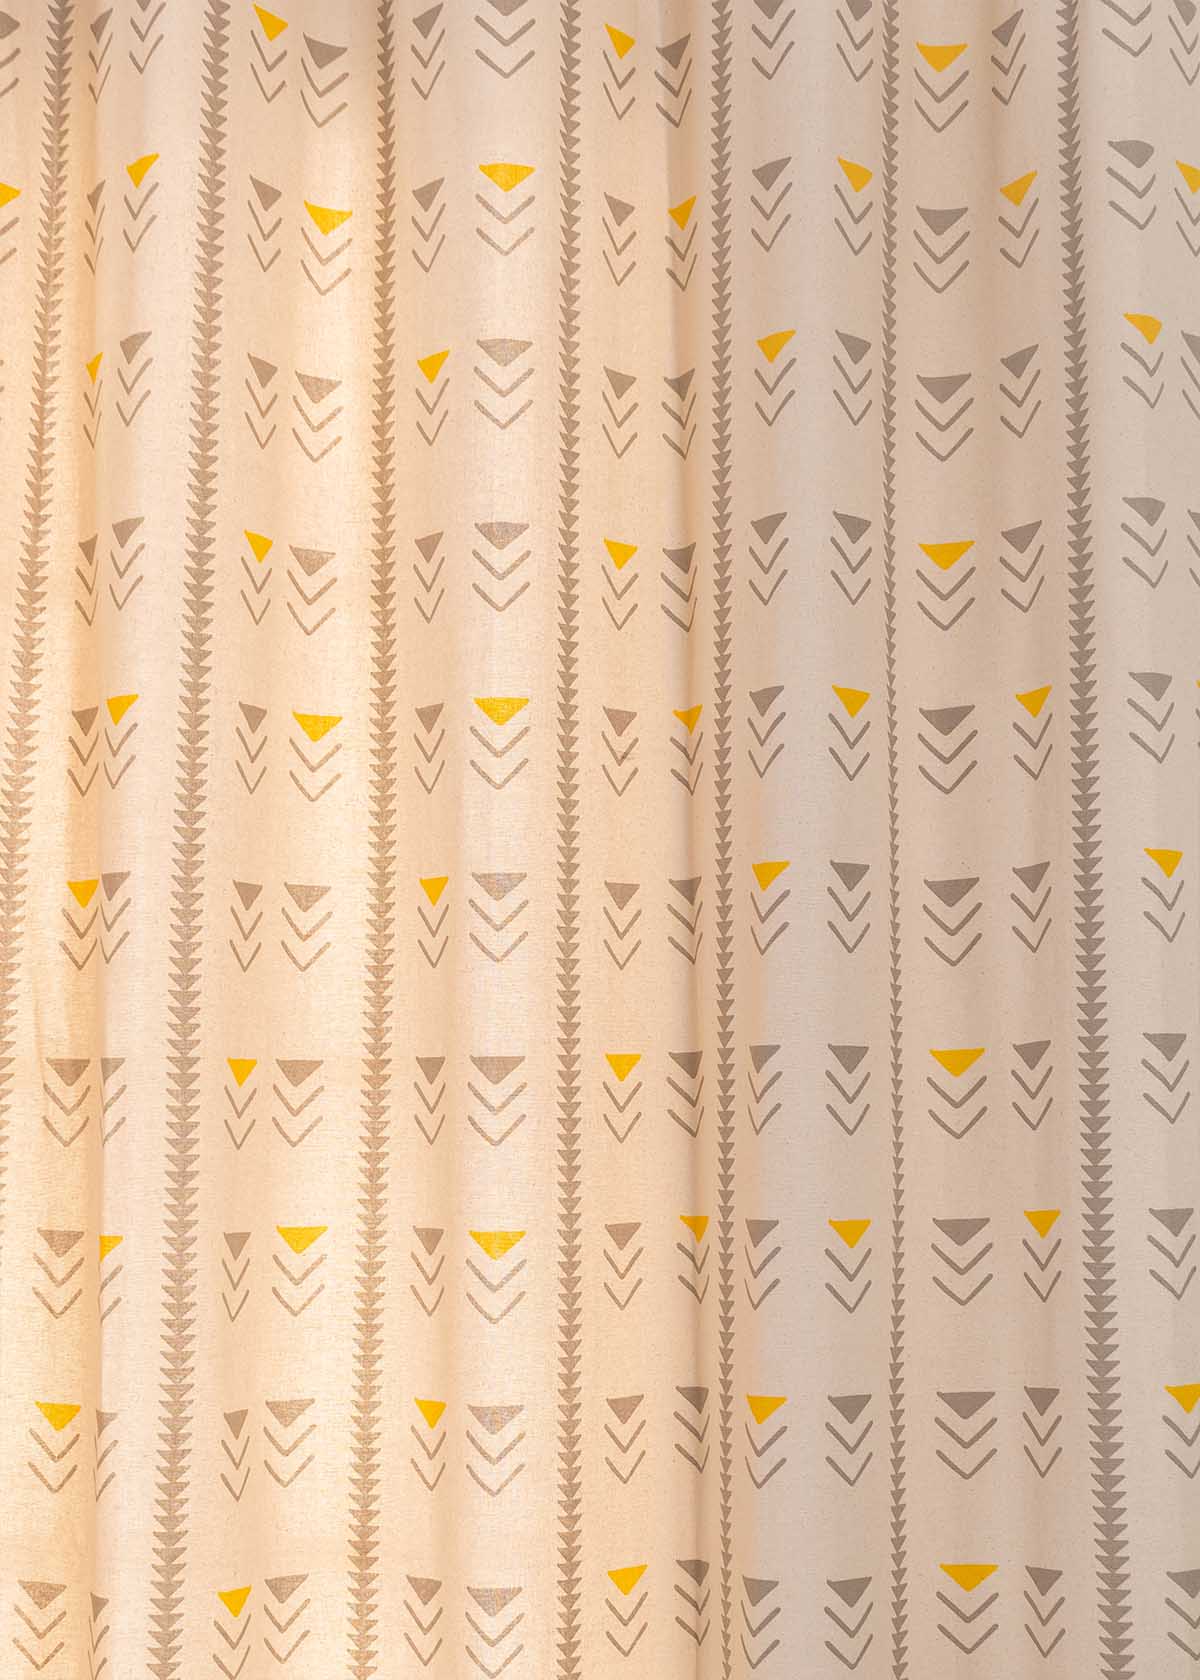 Mudline Printed 100% cotton ethnic curtain for living room - Room darkening - Mustard - Pack of 1